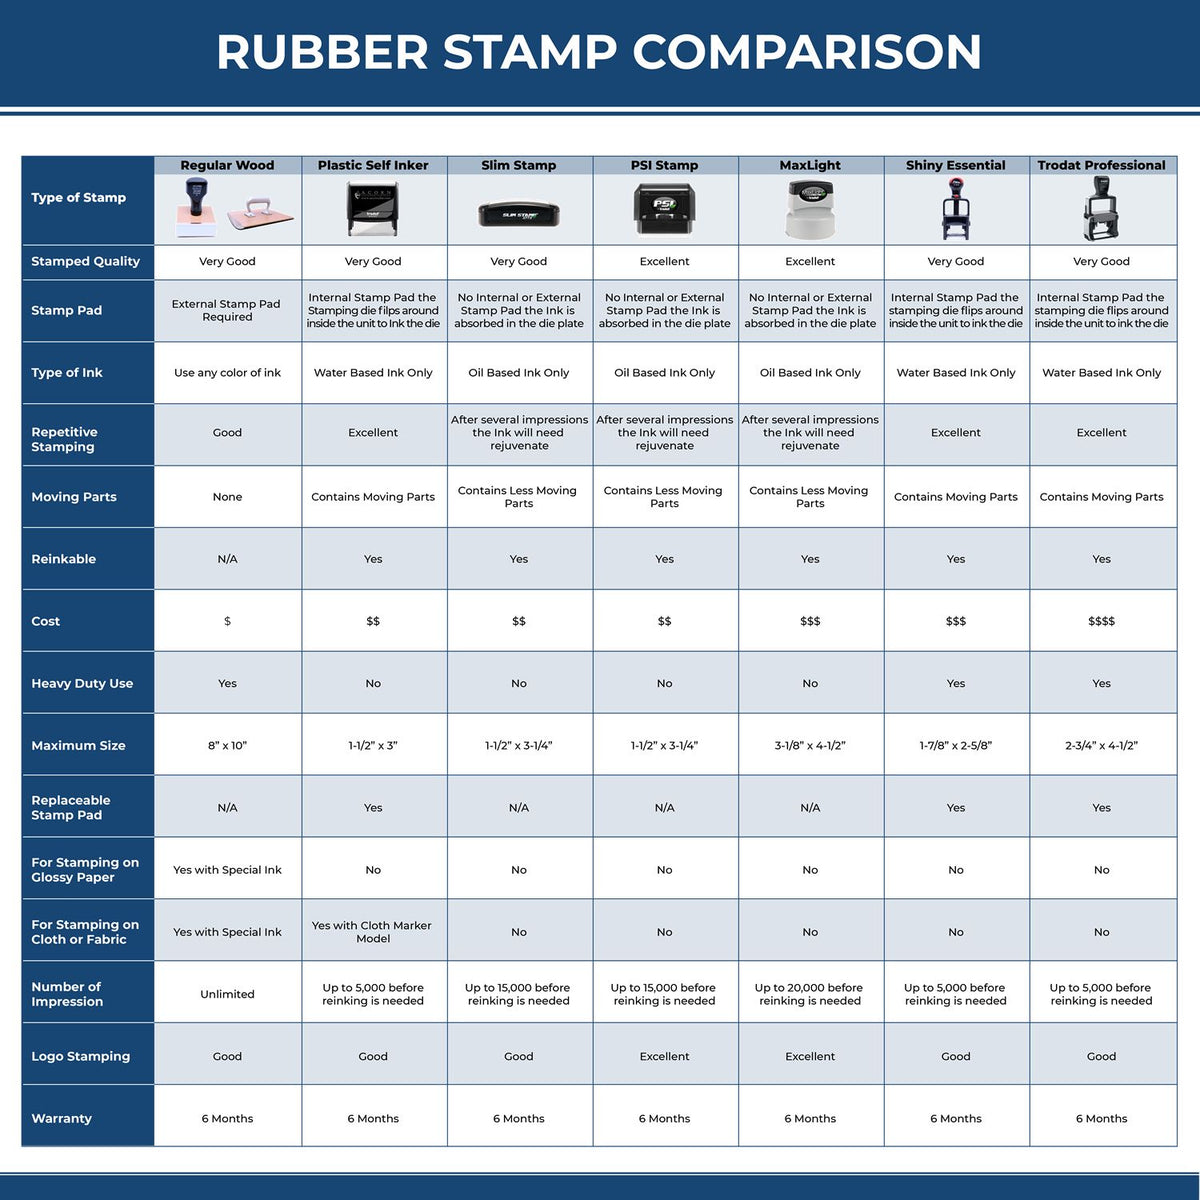 Large Media Center Rubber Stamp 4653R Rubber Stamp Comparison